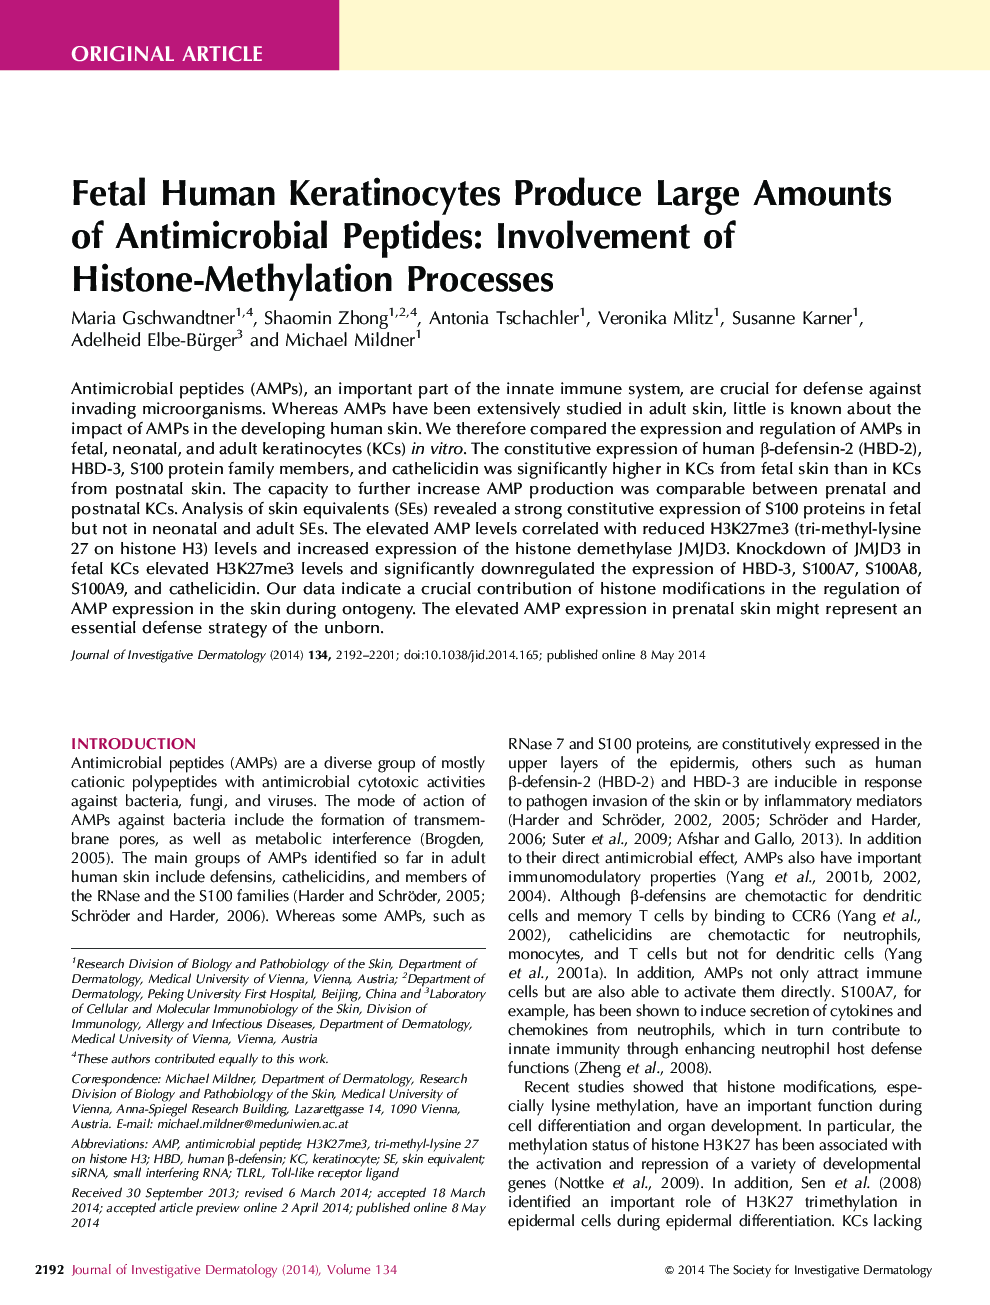 Fetal Human Keratinocytes Produce Large Amounts of Antimicrobial Peptides: Involvement of Histone-Methylation Processes